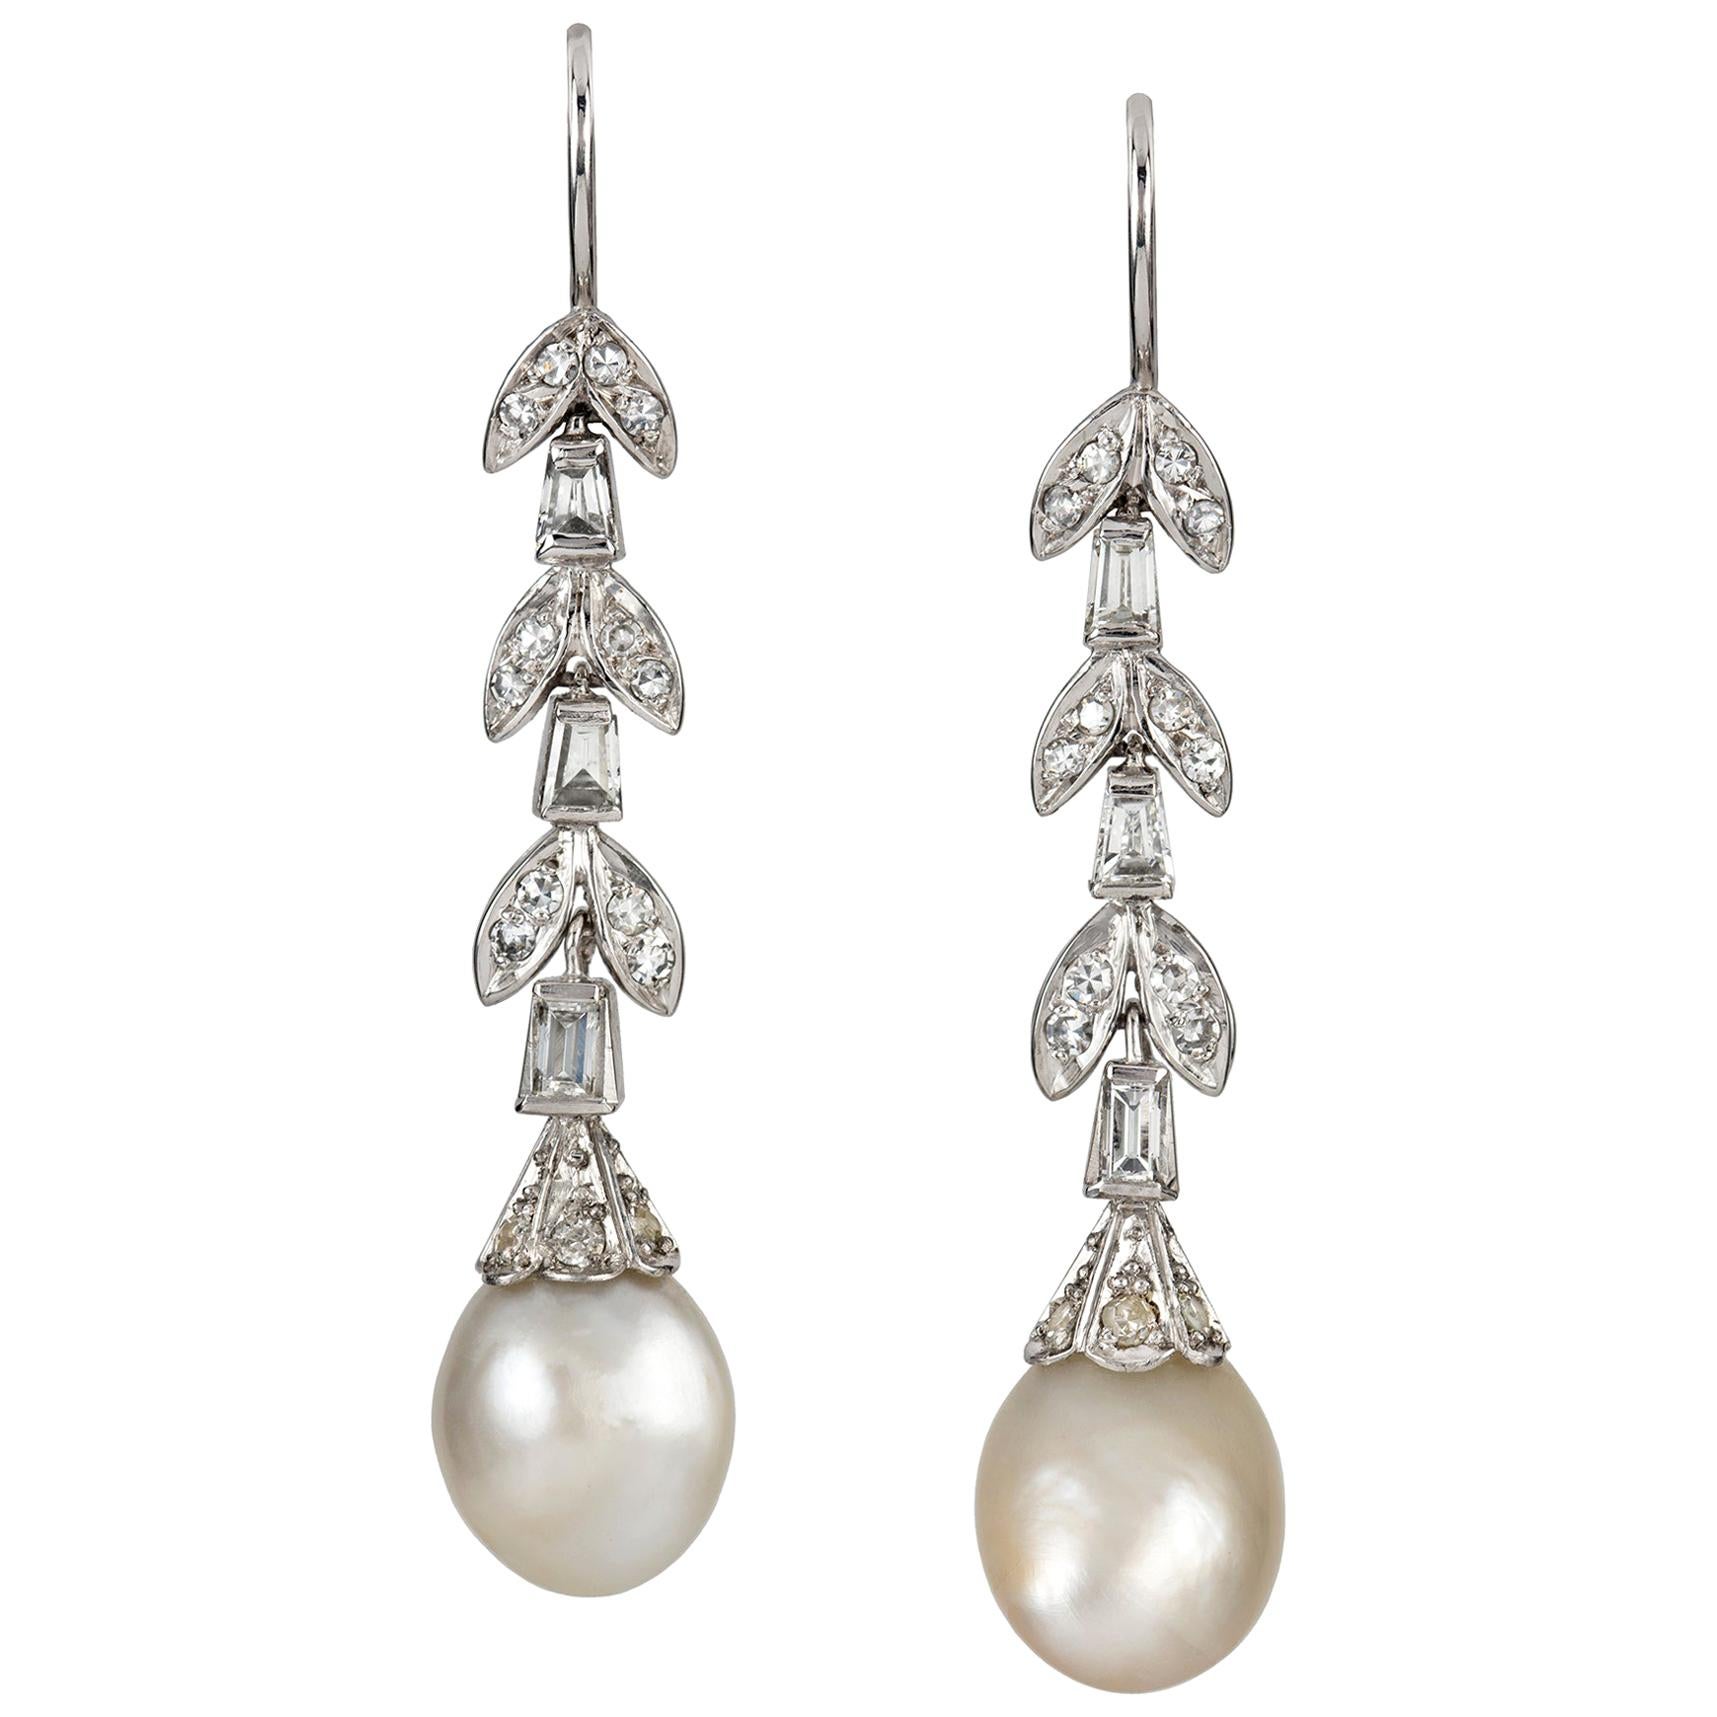 Pair of Natural Pearl and Diamond Drop Earrings